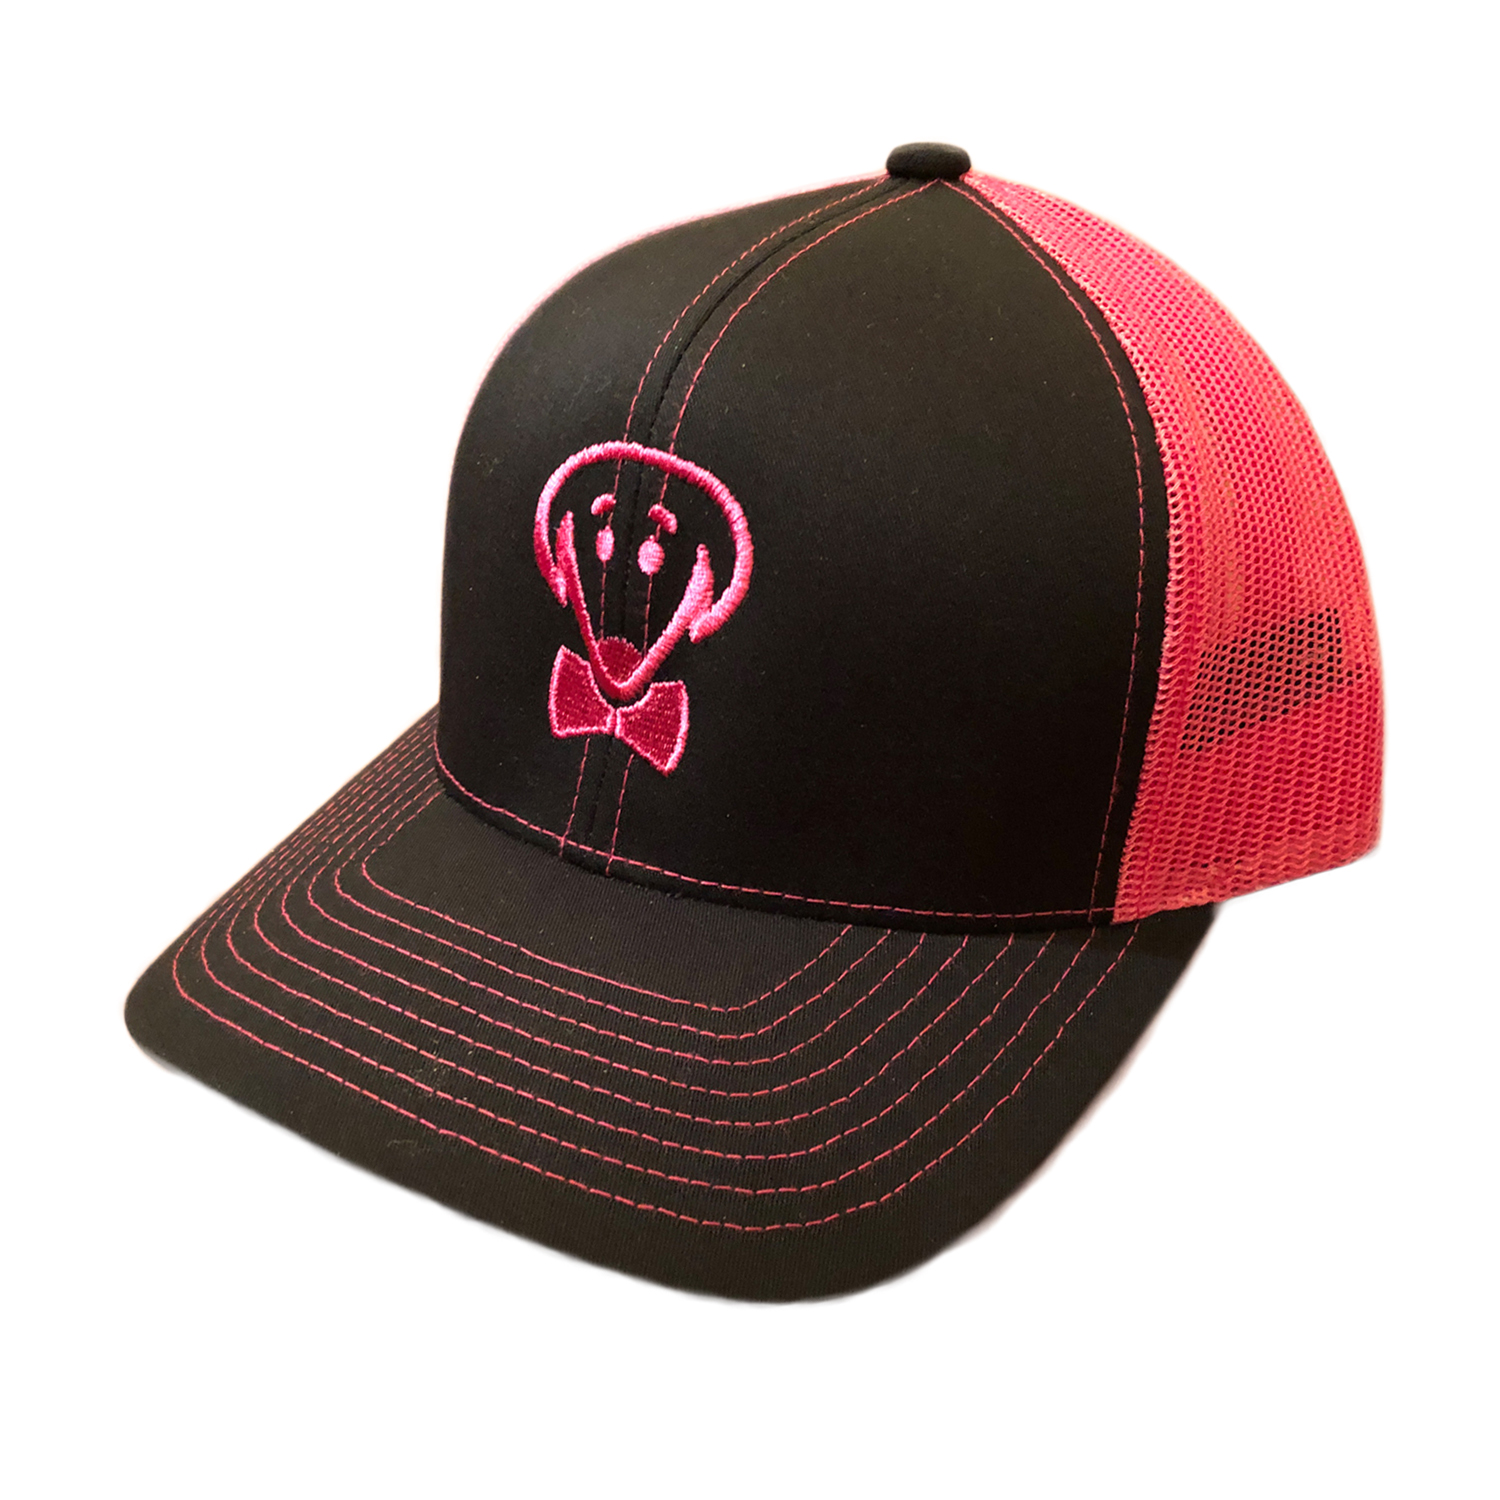 Beau Tyler - Alternate Duke baseball hat pink temp2